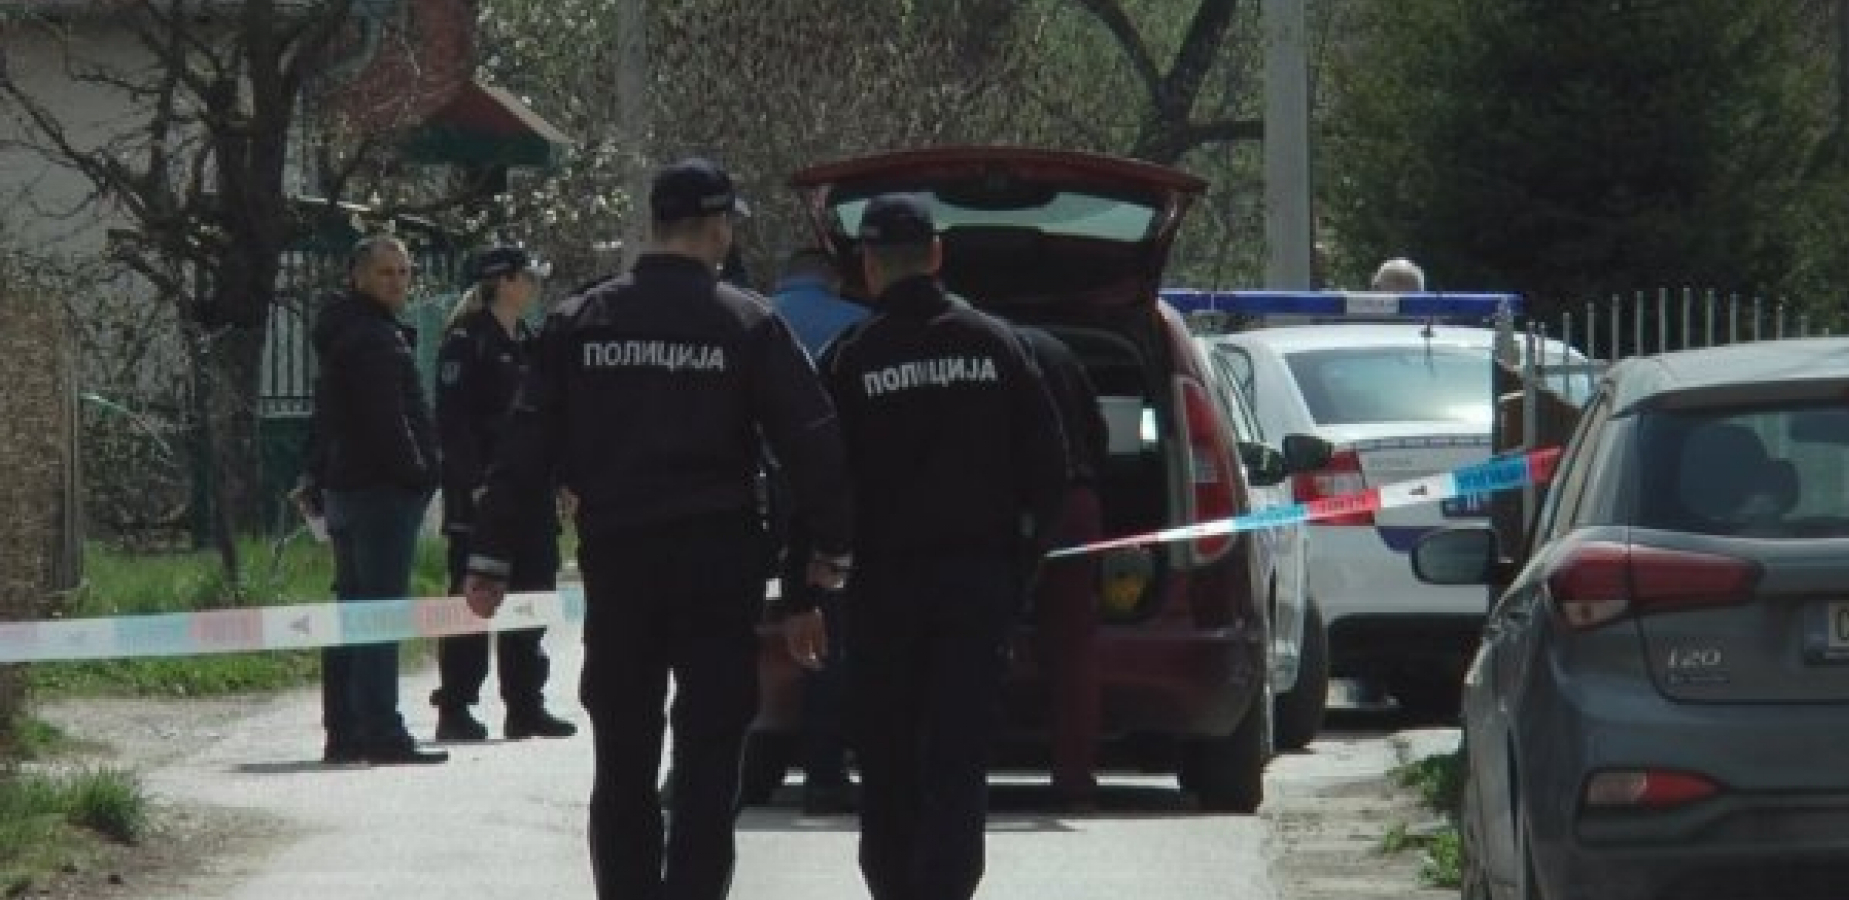 DOJAVE O BOMBAMA NE PRESTAJU Policija u Kragujevcu reagovala